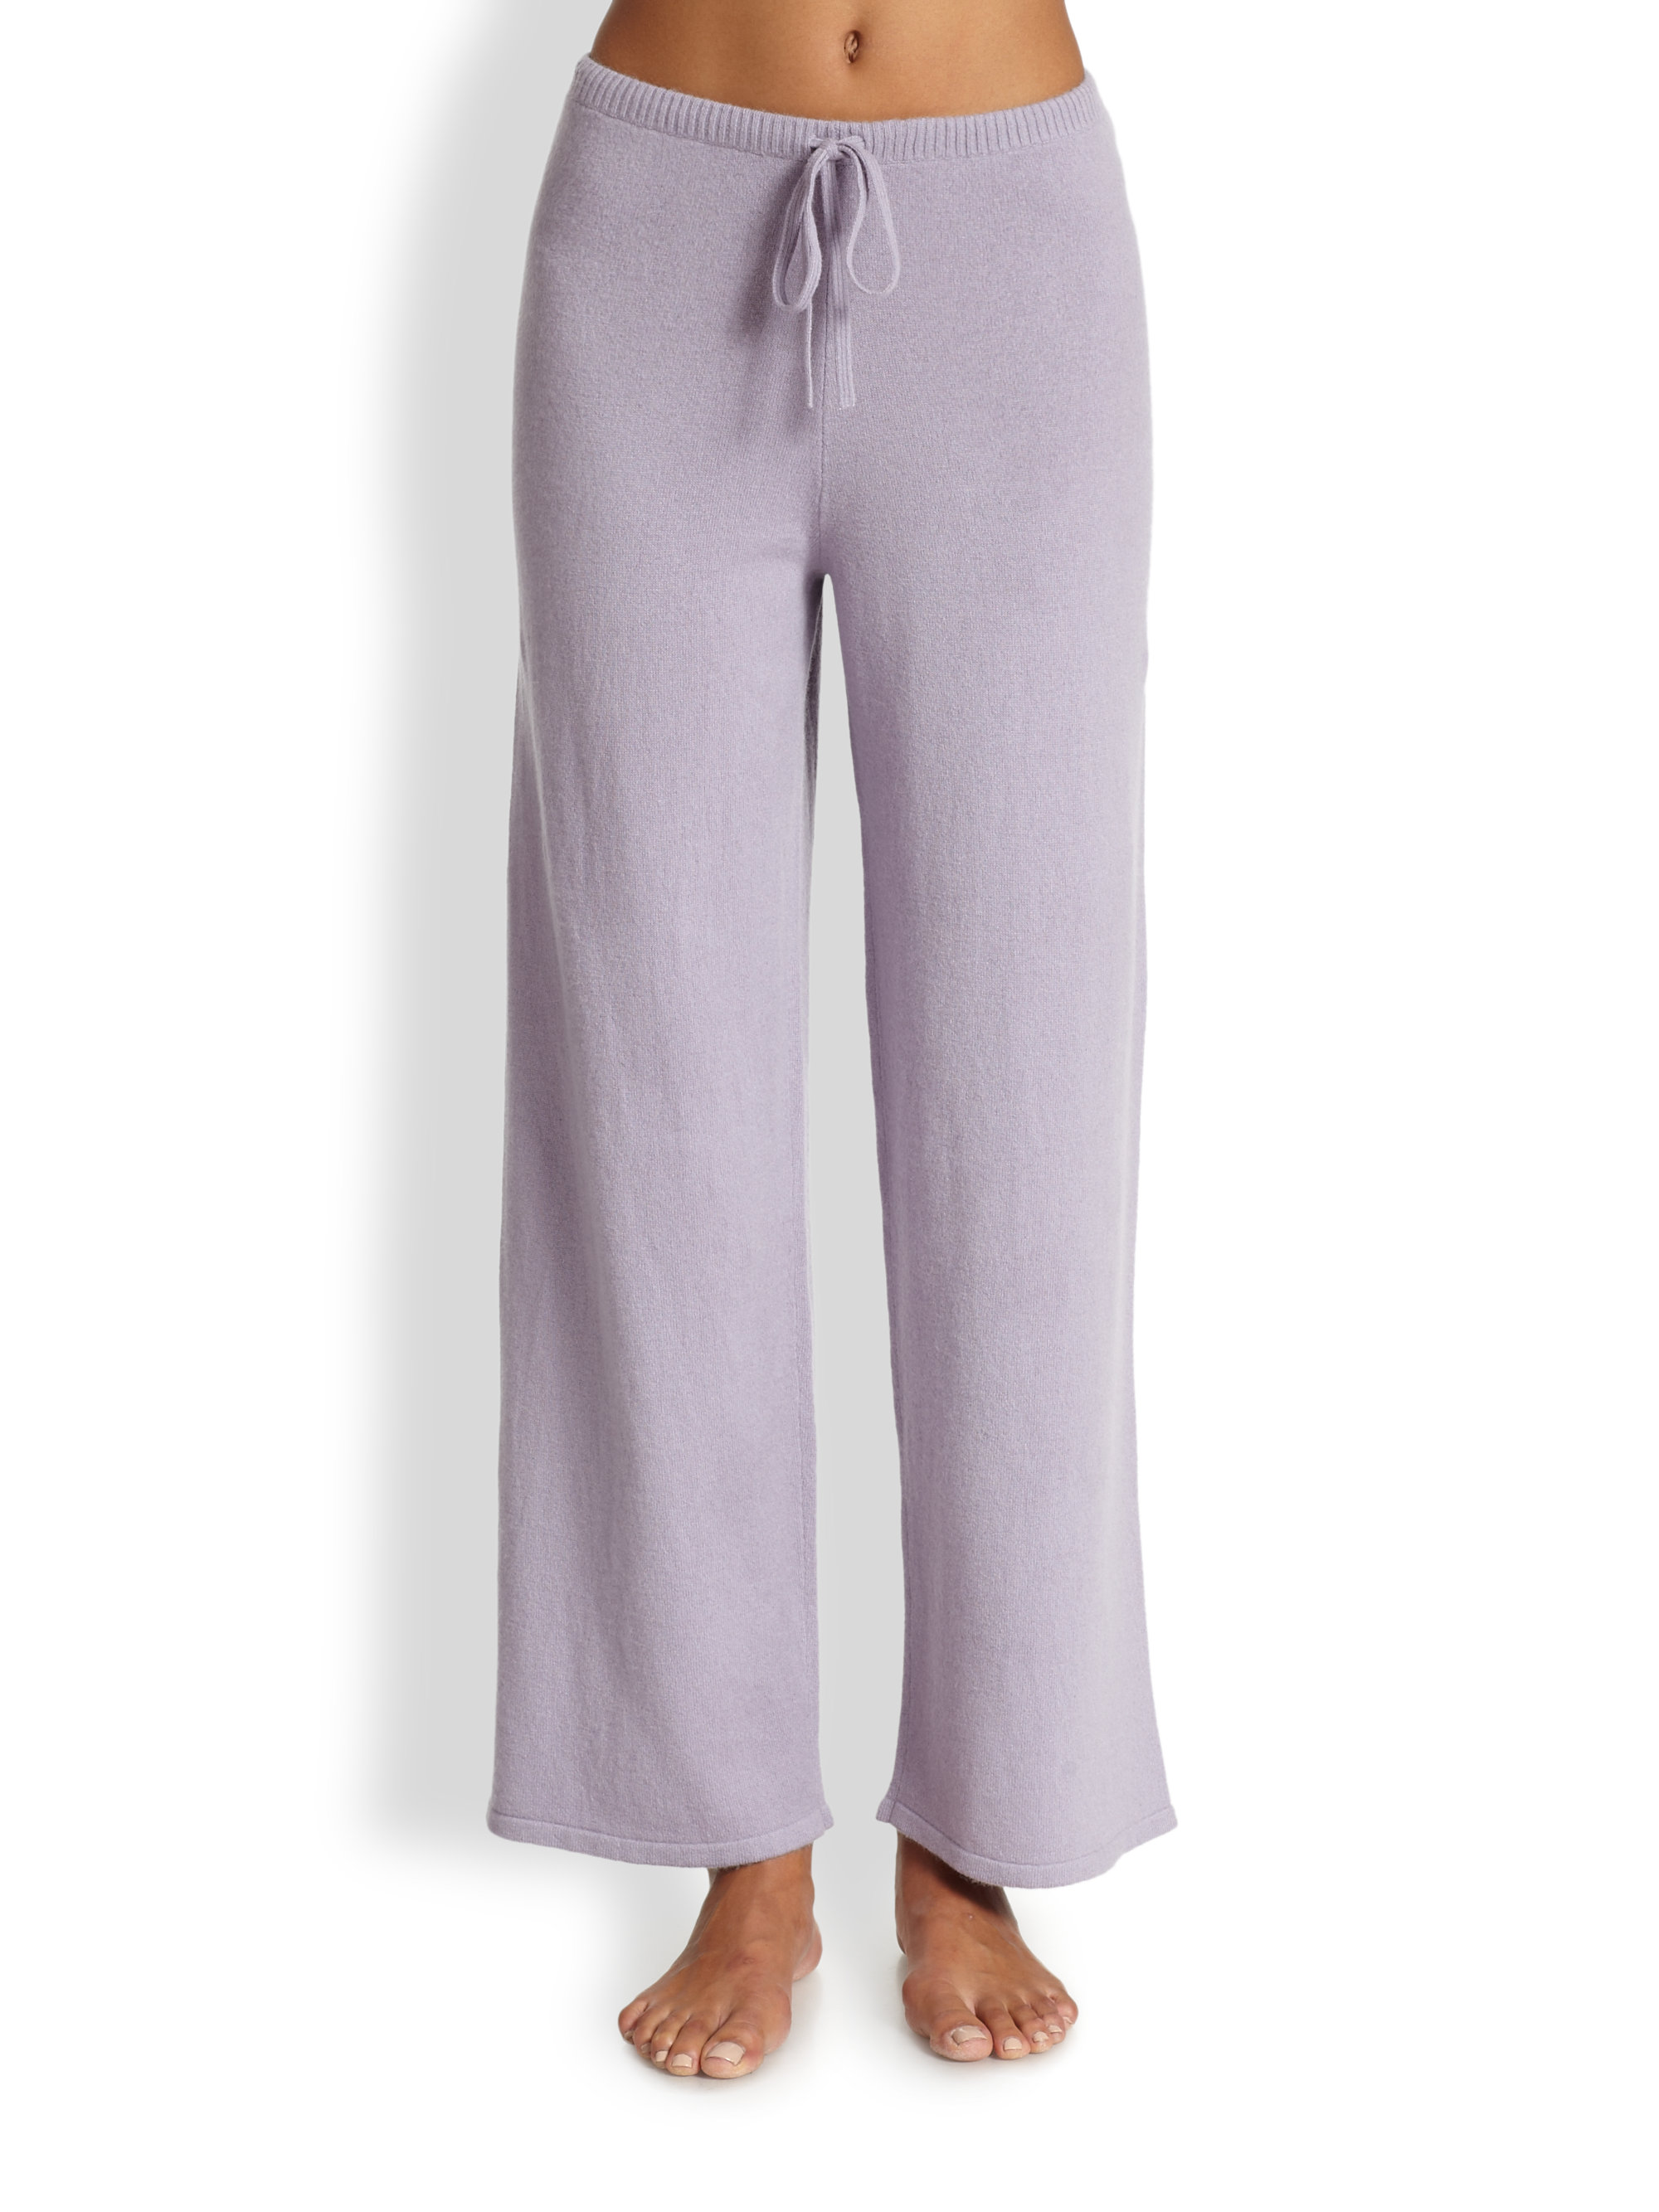 Lyst - Saks fifth avenue Cashmere Pajama Pants in Purple